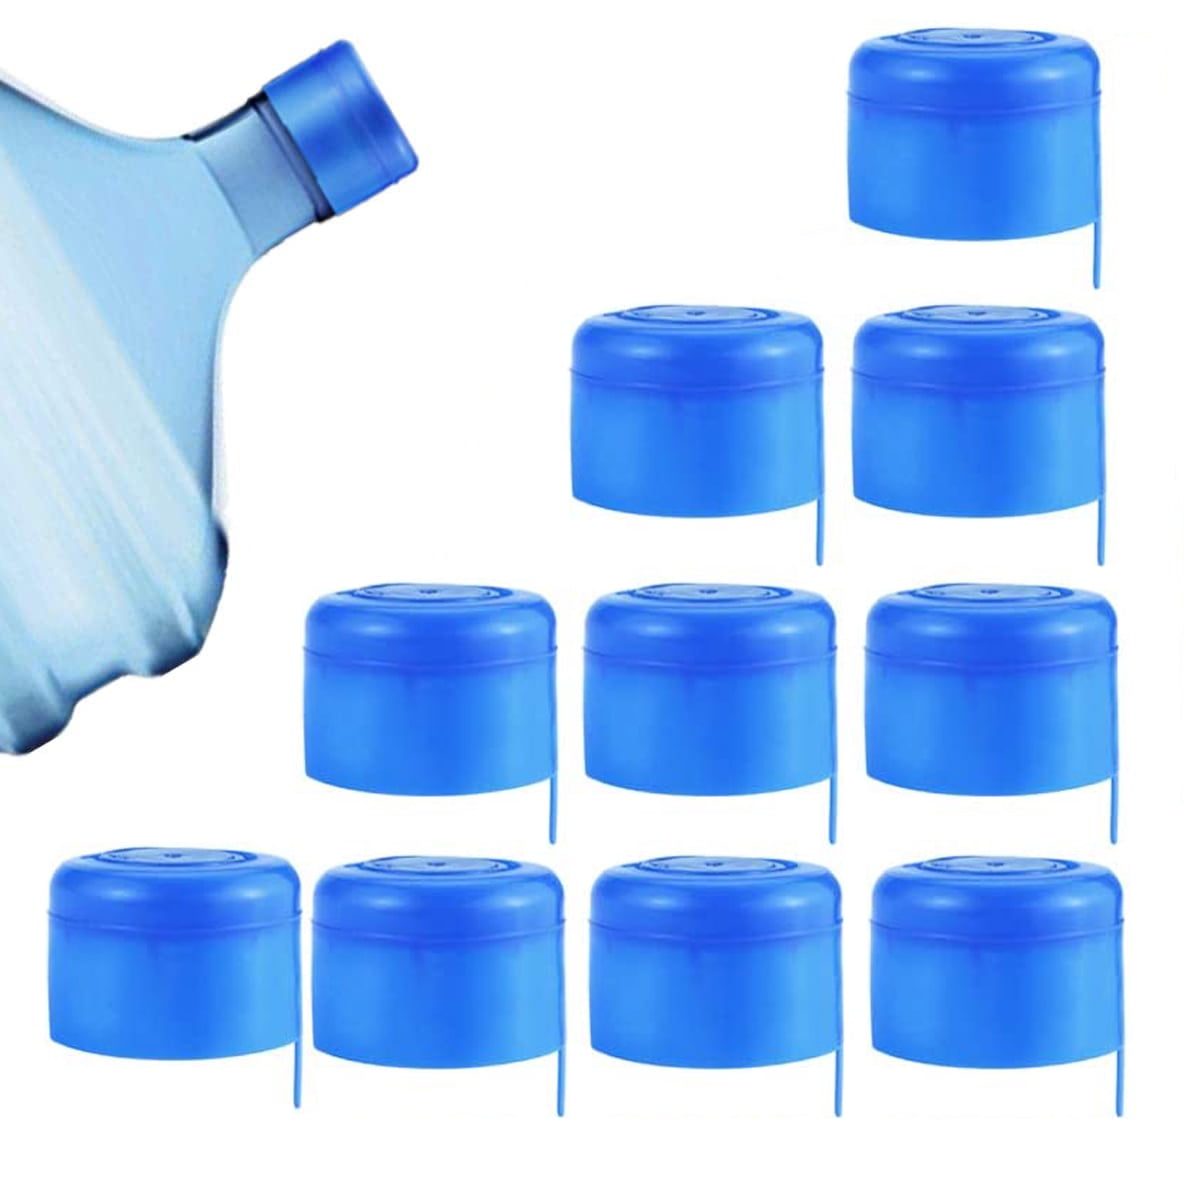 5 Gallon Jug Lid Gallon Jug Lid Fits 55mm Bottles 4 Pack Silicone Reusable No Spill Top 